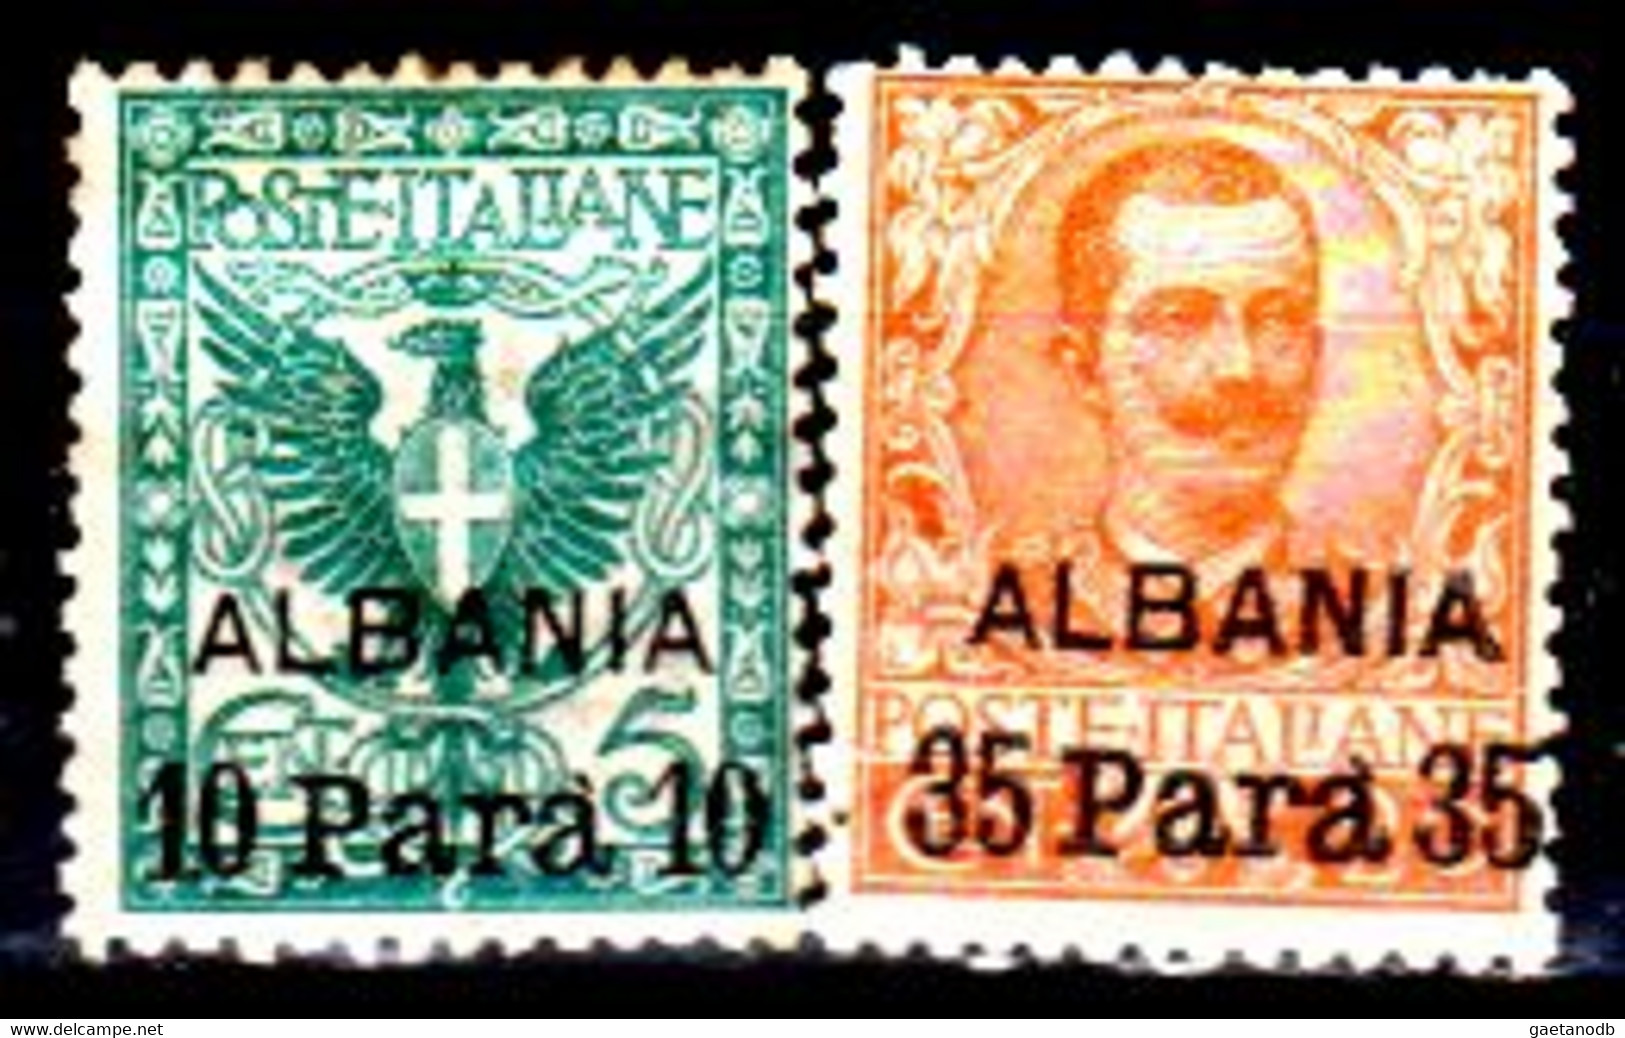 Italia-G-1026 - Albania 1902: Sassone, N. 1, 2 (+) Hinged - Qualità A Vostro Giudizio. - Albanie